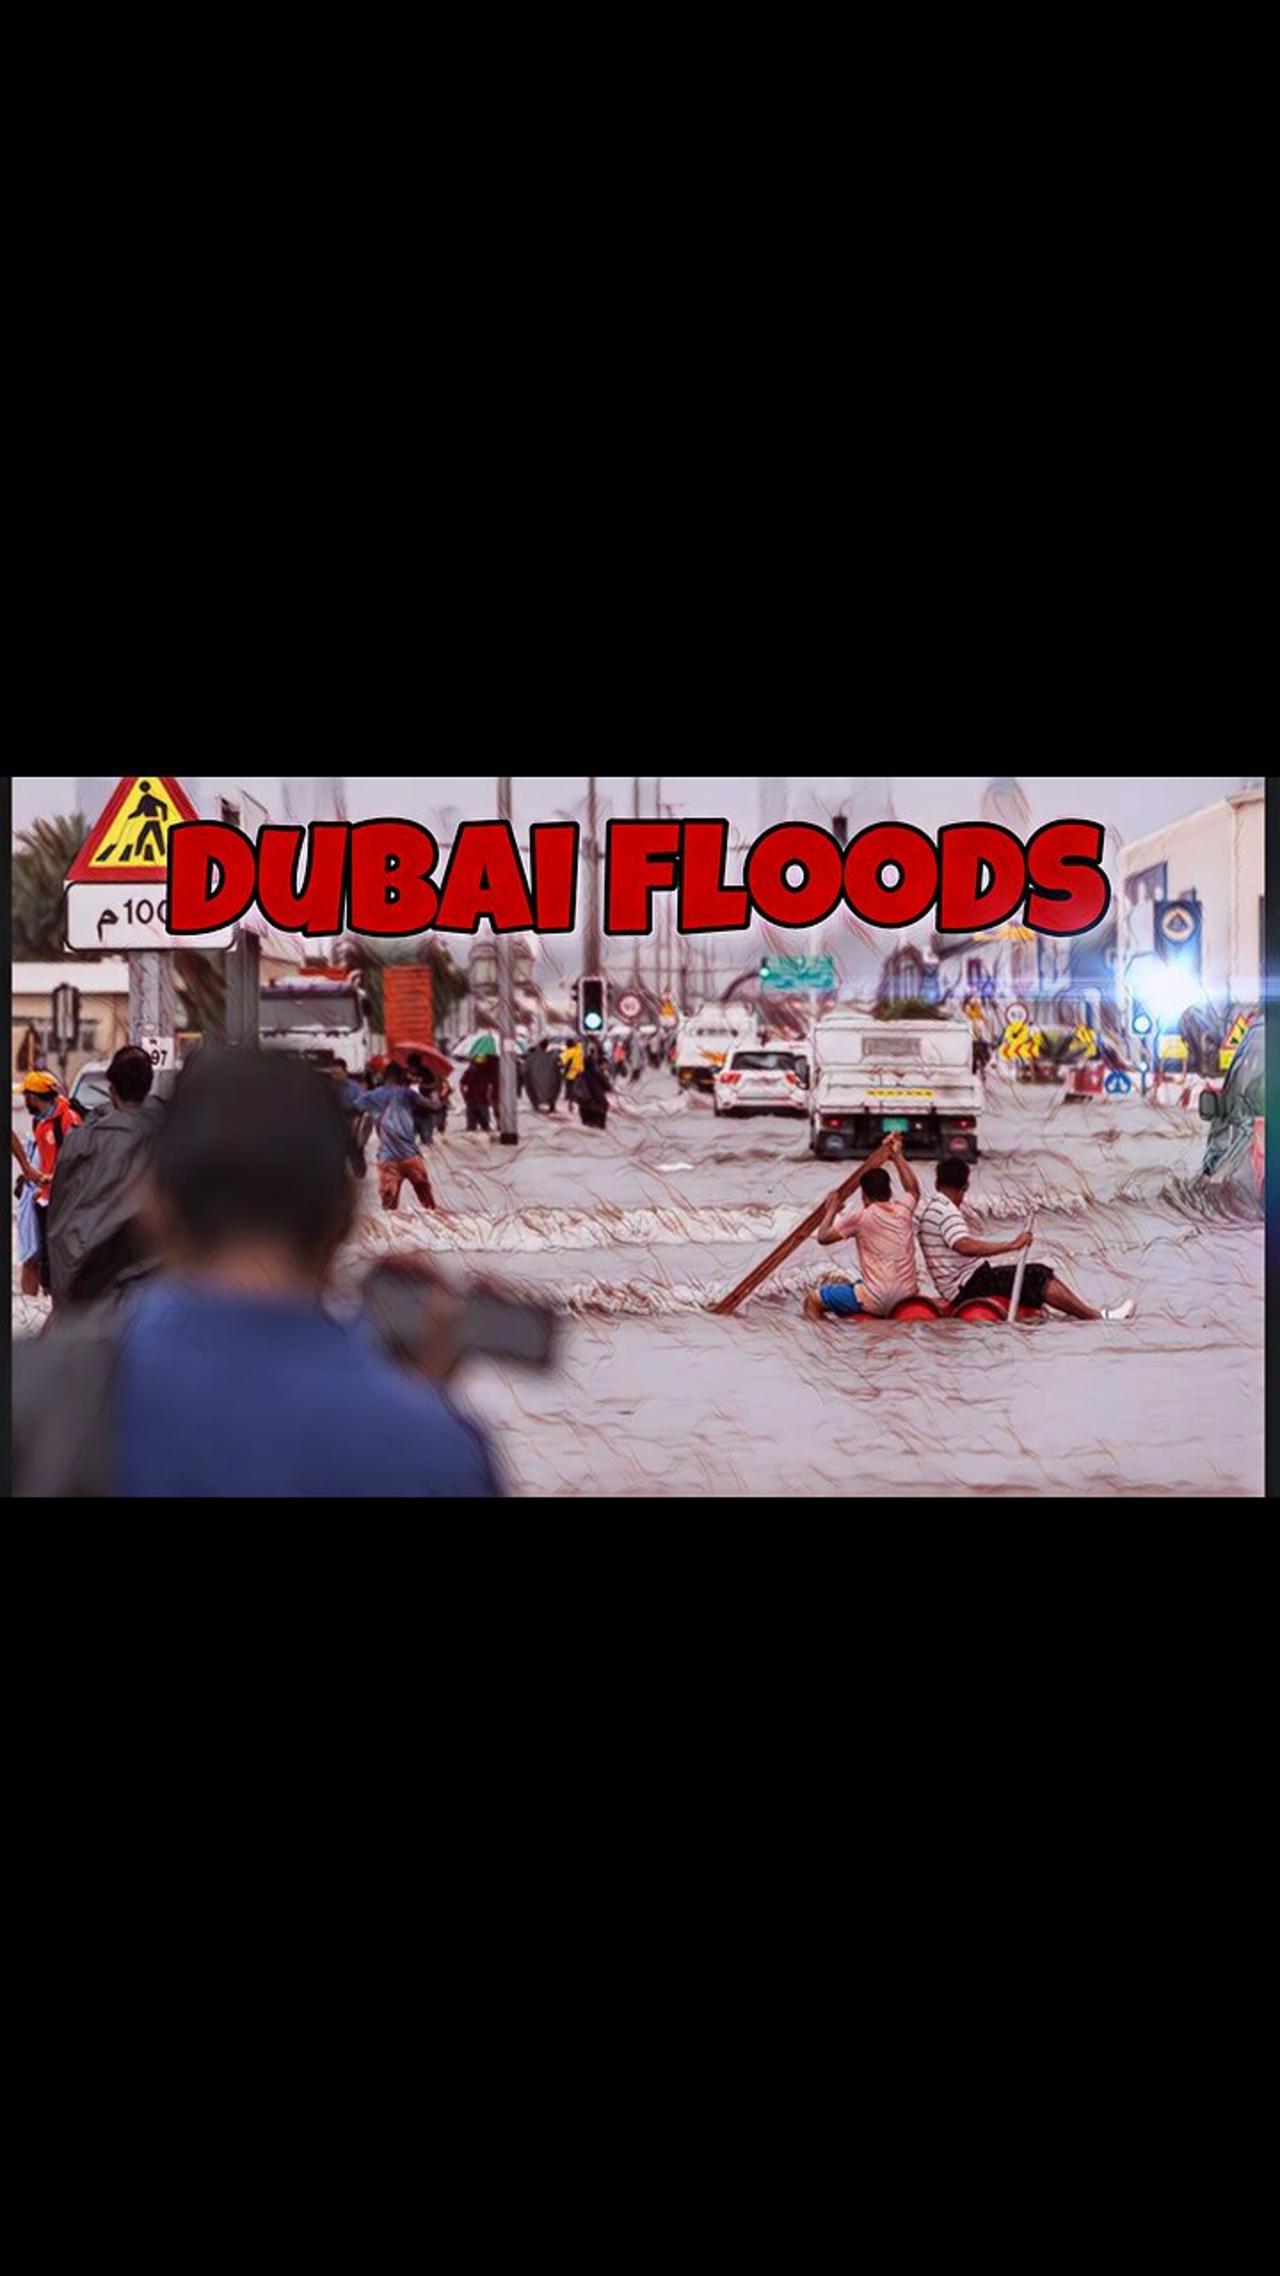 Flooding in Dubai